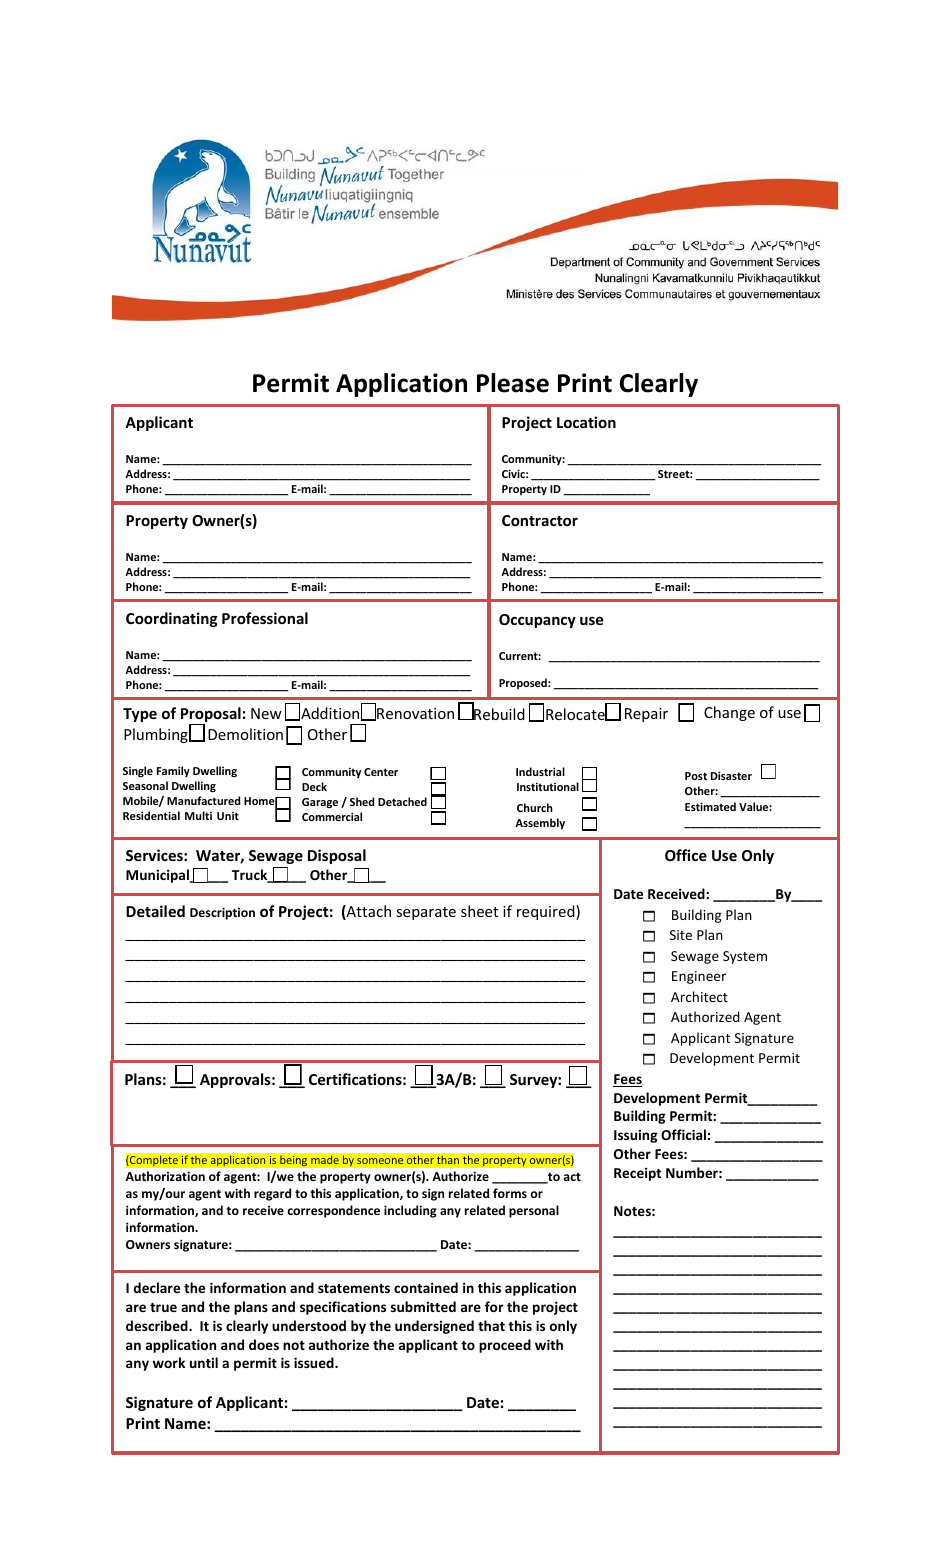 Building Permit Application - Nunavut, Canada, Page 1